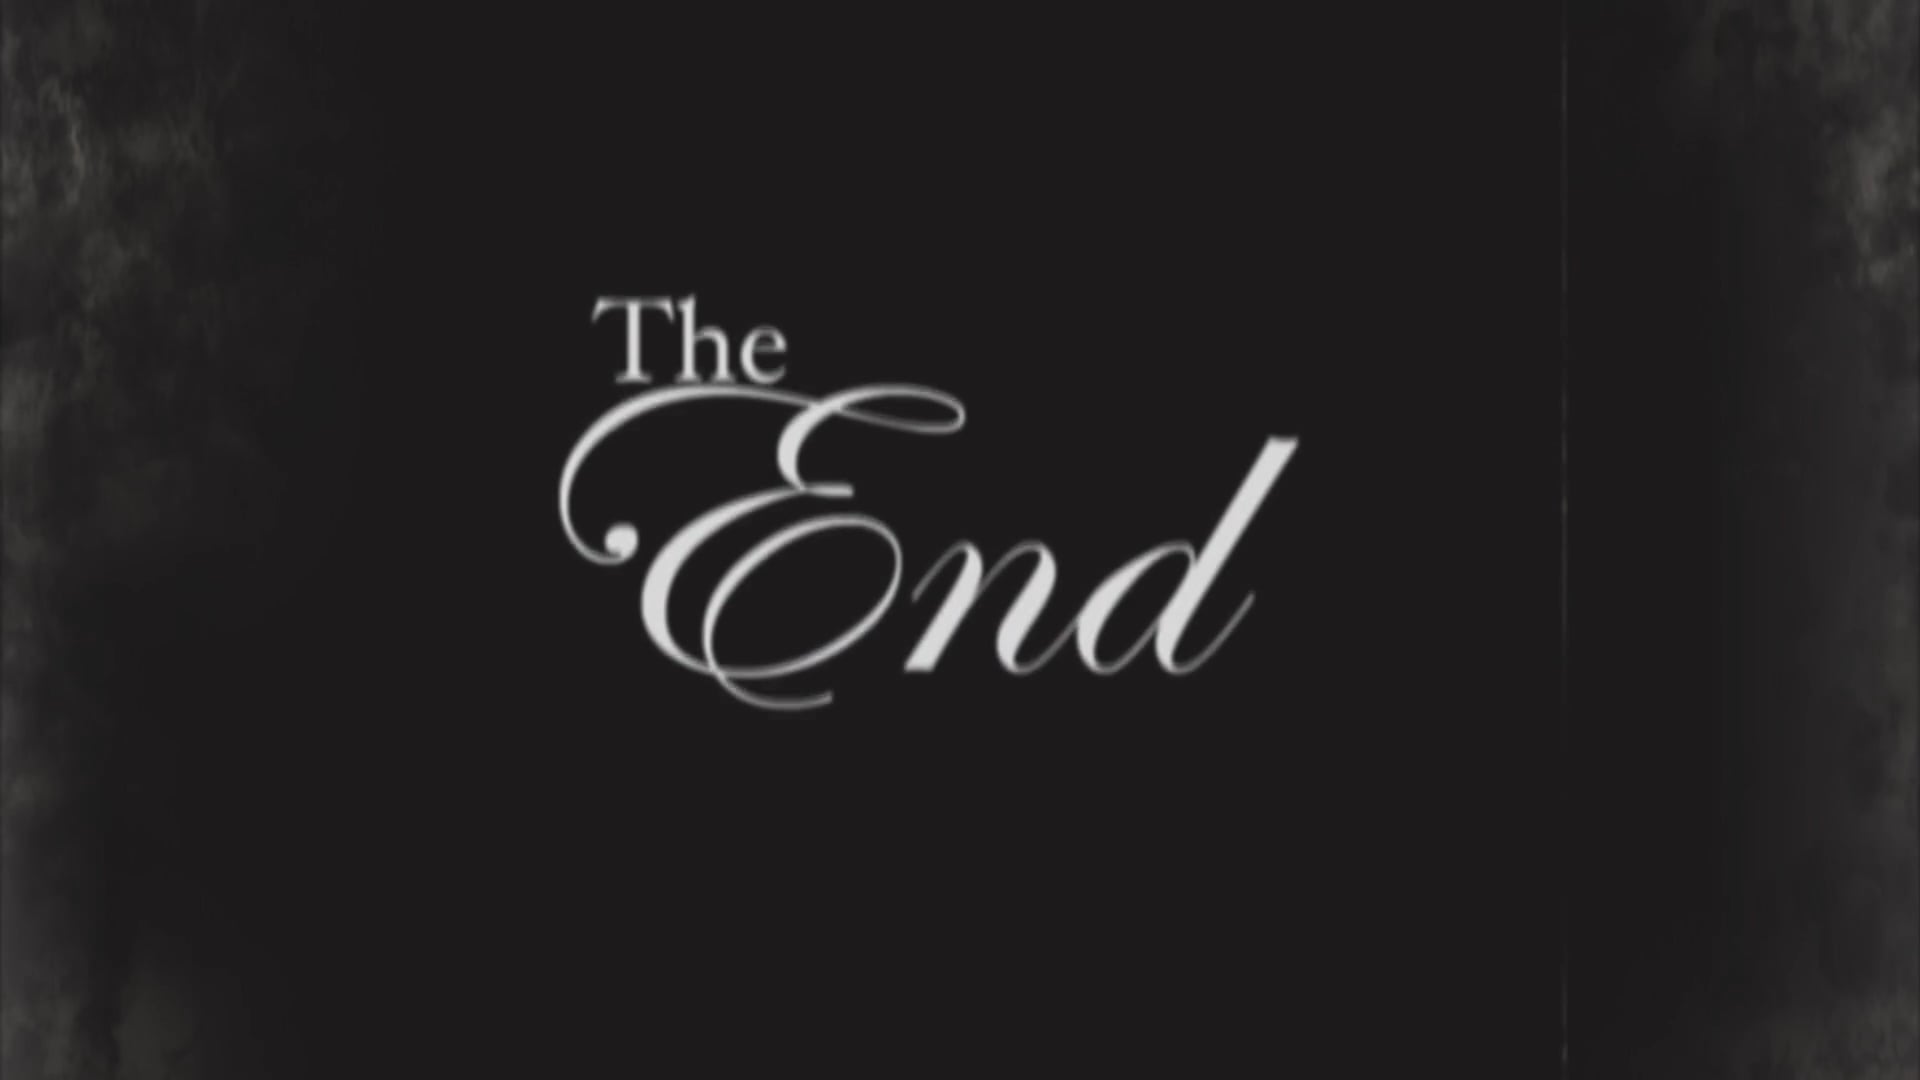 The end конец